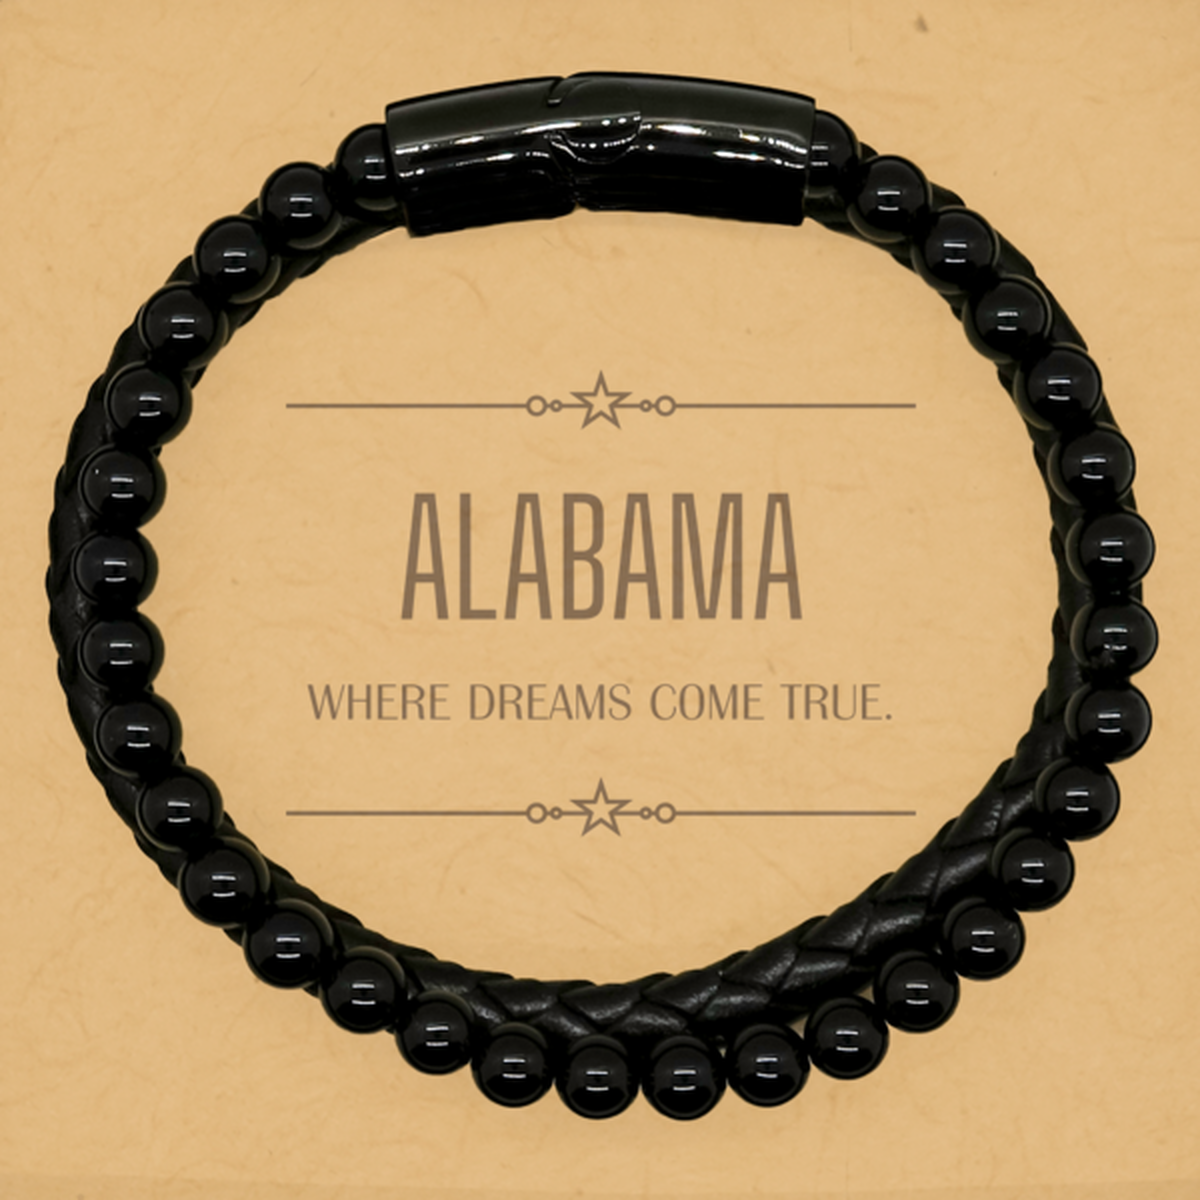 Love Alabama State Stone Leather Bracelets, Alabama Where dreams come true, Birthday Inspirational Gifts For Alabama Men, Women, Friends